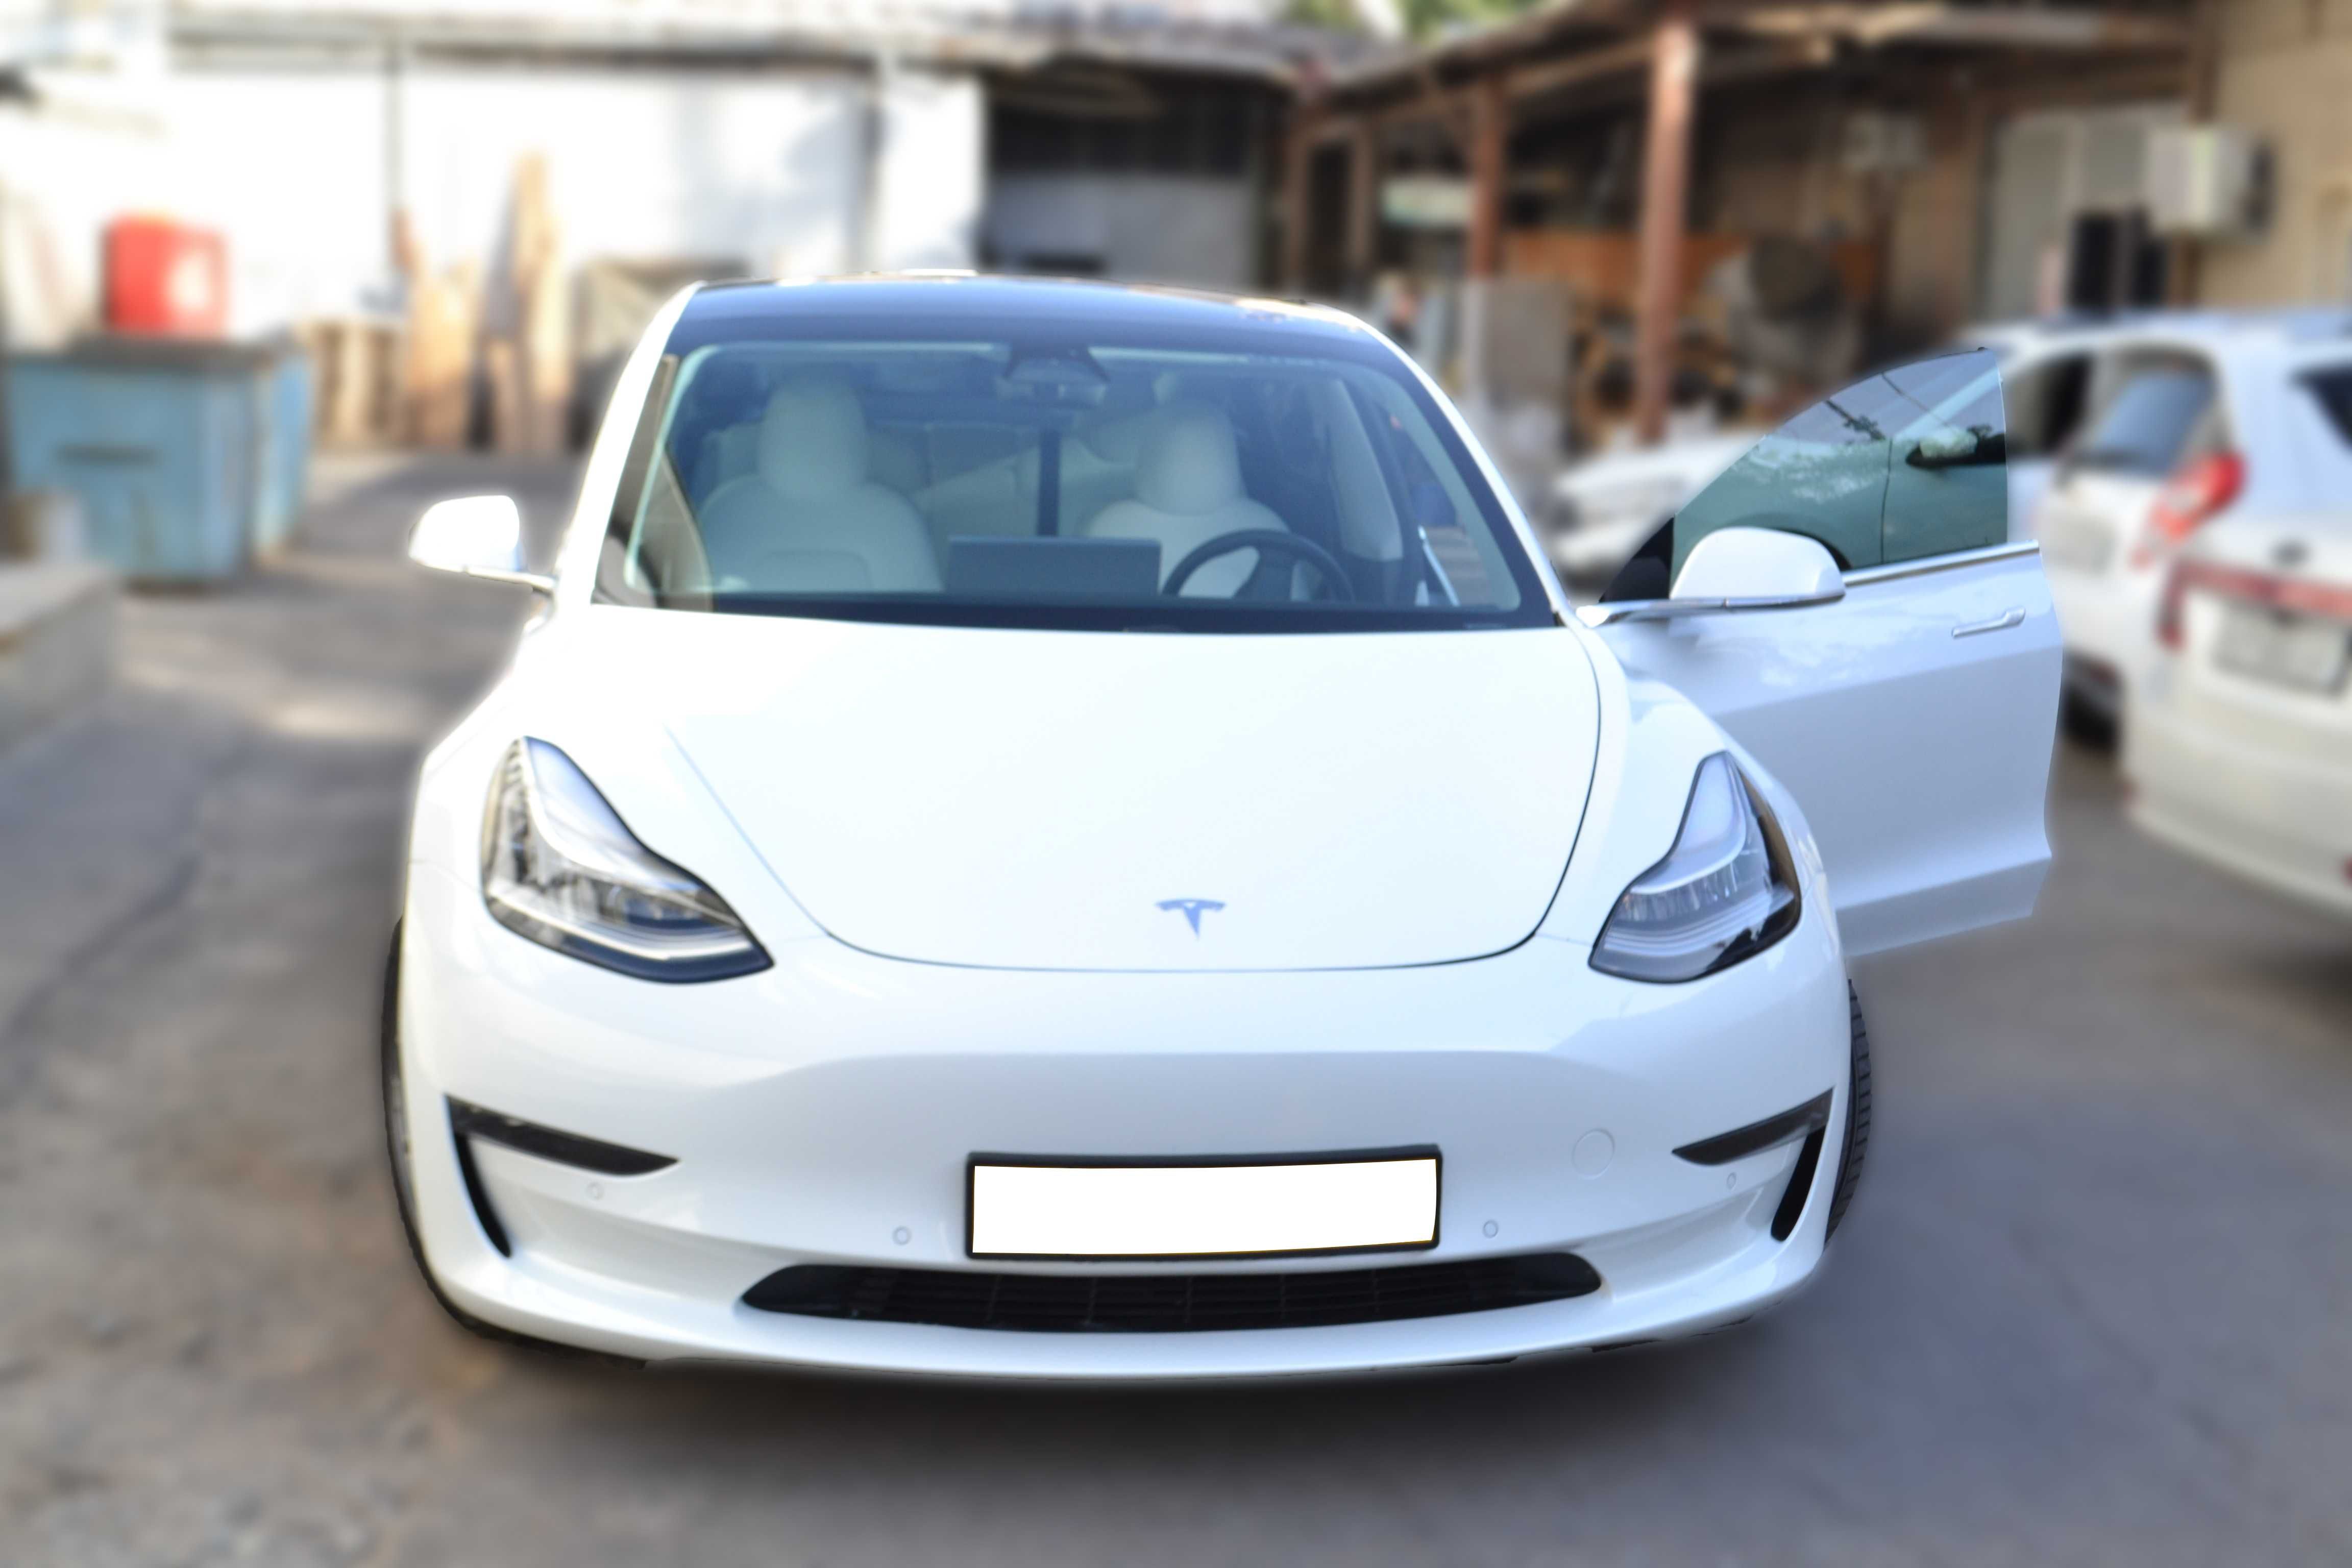 Tesla Model 3 Dual Motor Long Range Белый Салон Полный Автопилот